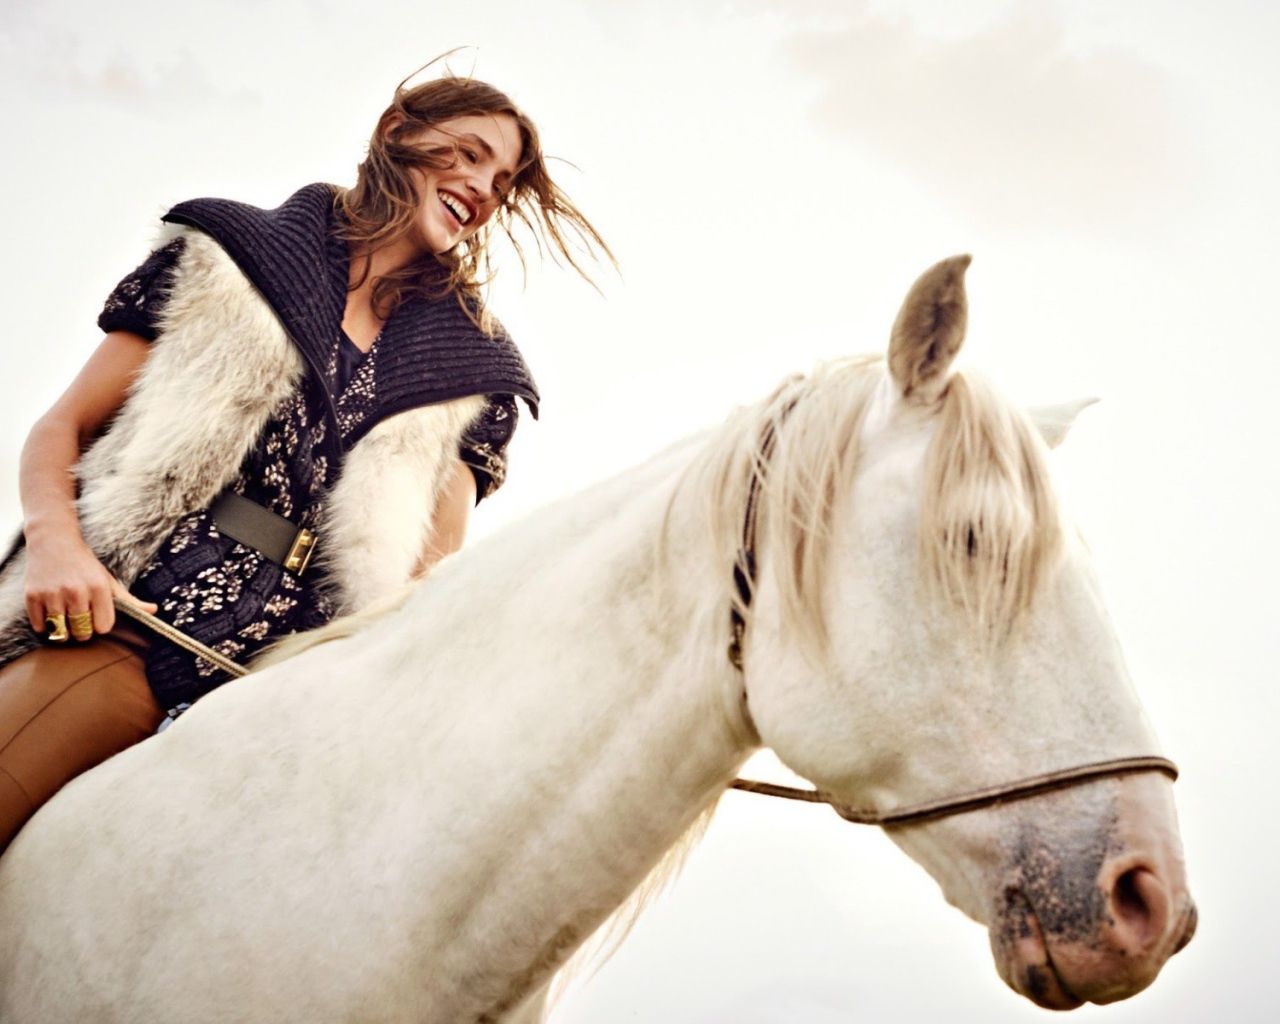 Girl riding on a white horse Desktop wallpaper 1280x1024